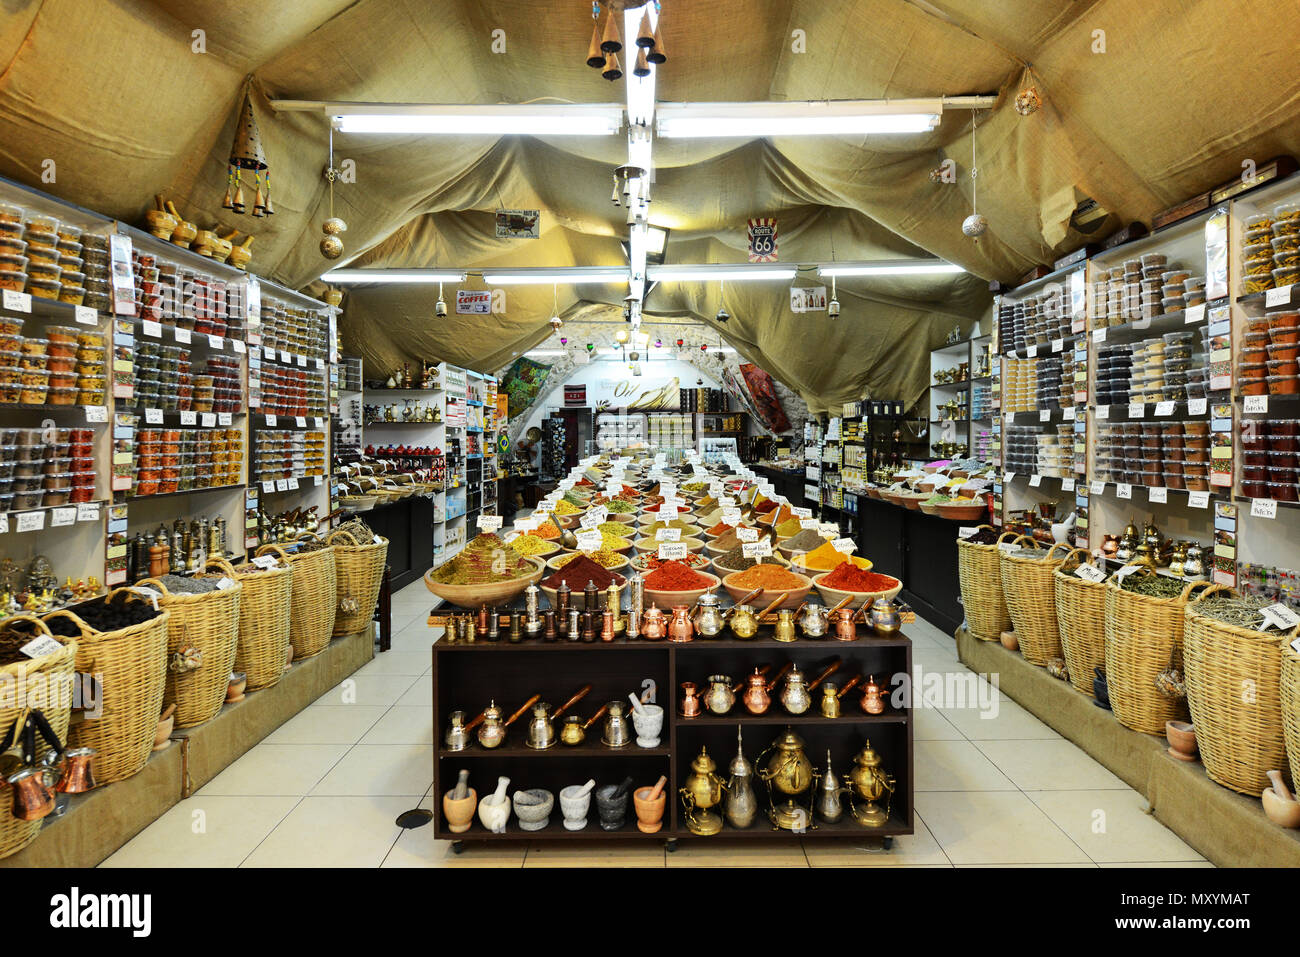 A colorful spice shop in the old city of Jerusalem Stock Photo - Alamy